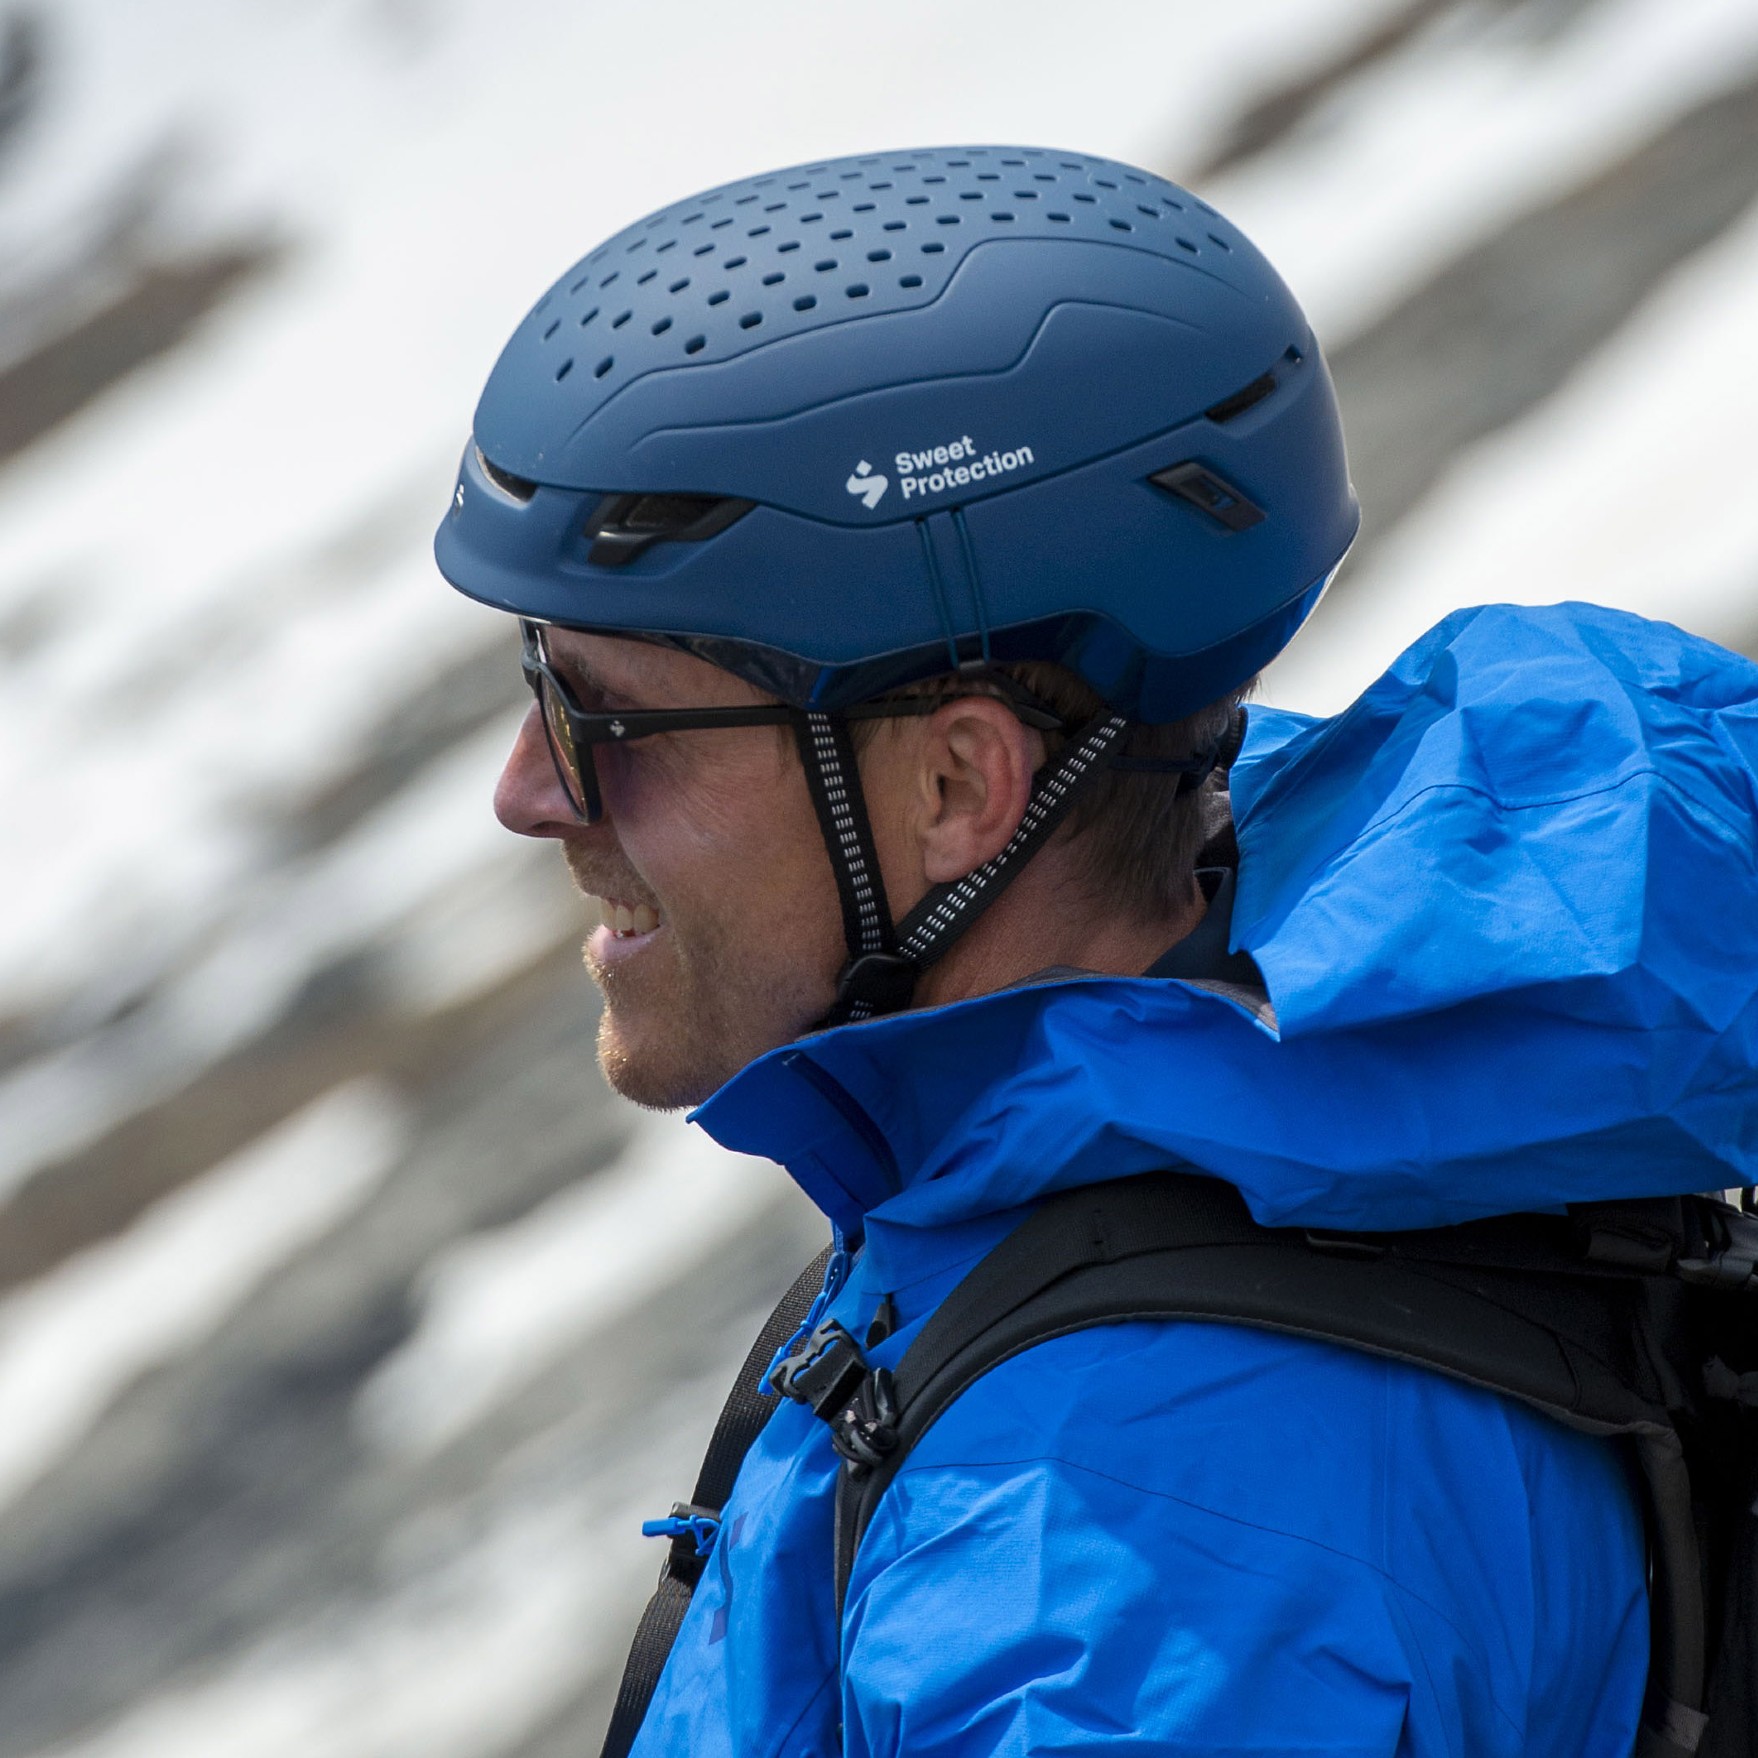 Sweet Protection Ascender MIPS Snowboard/Ski/Mountaineer Helmet